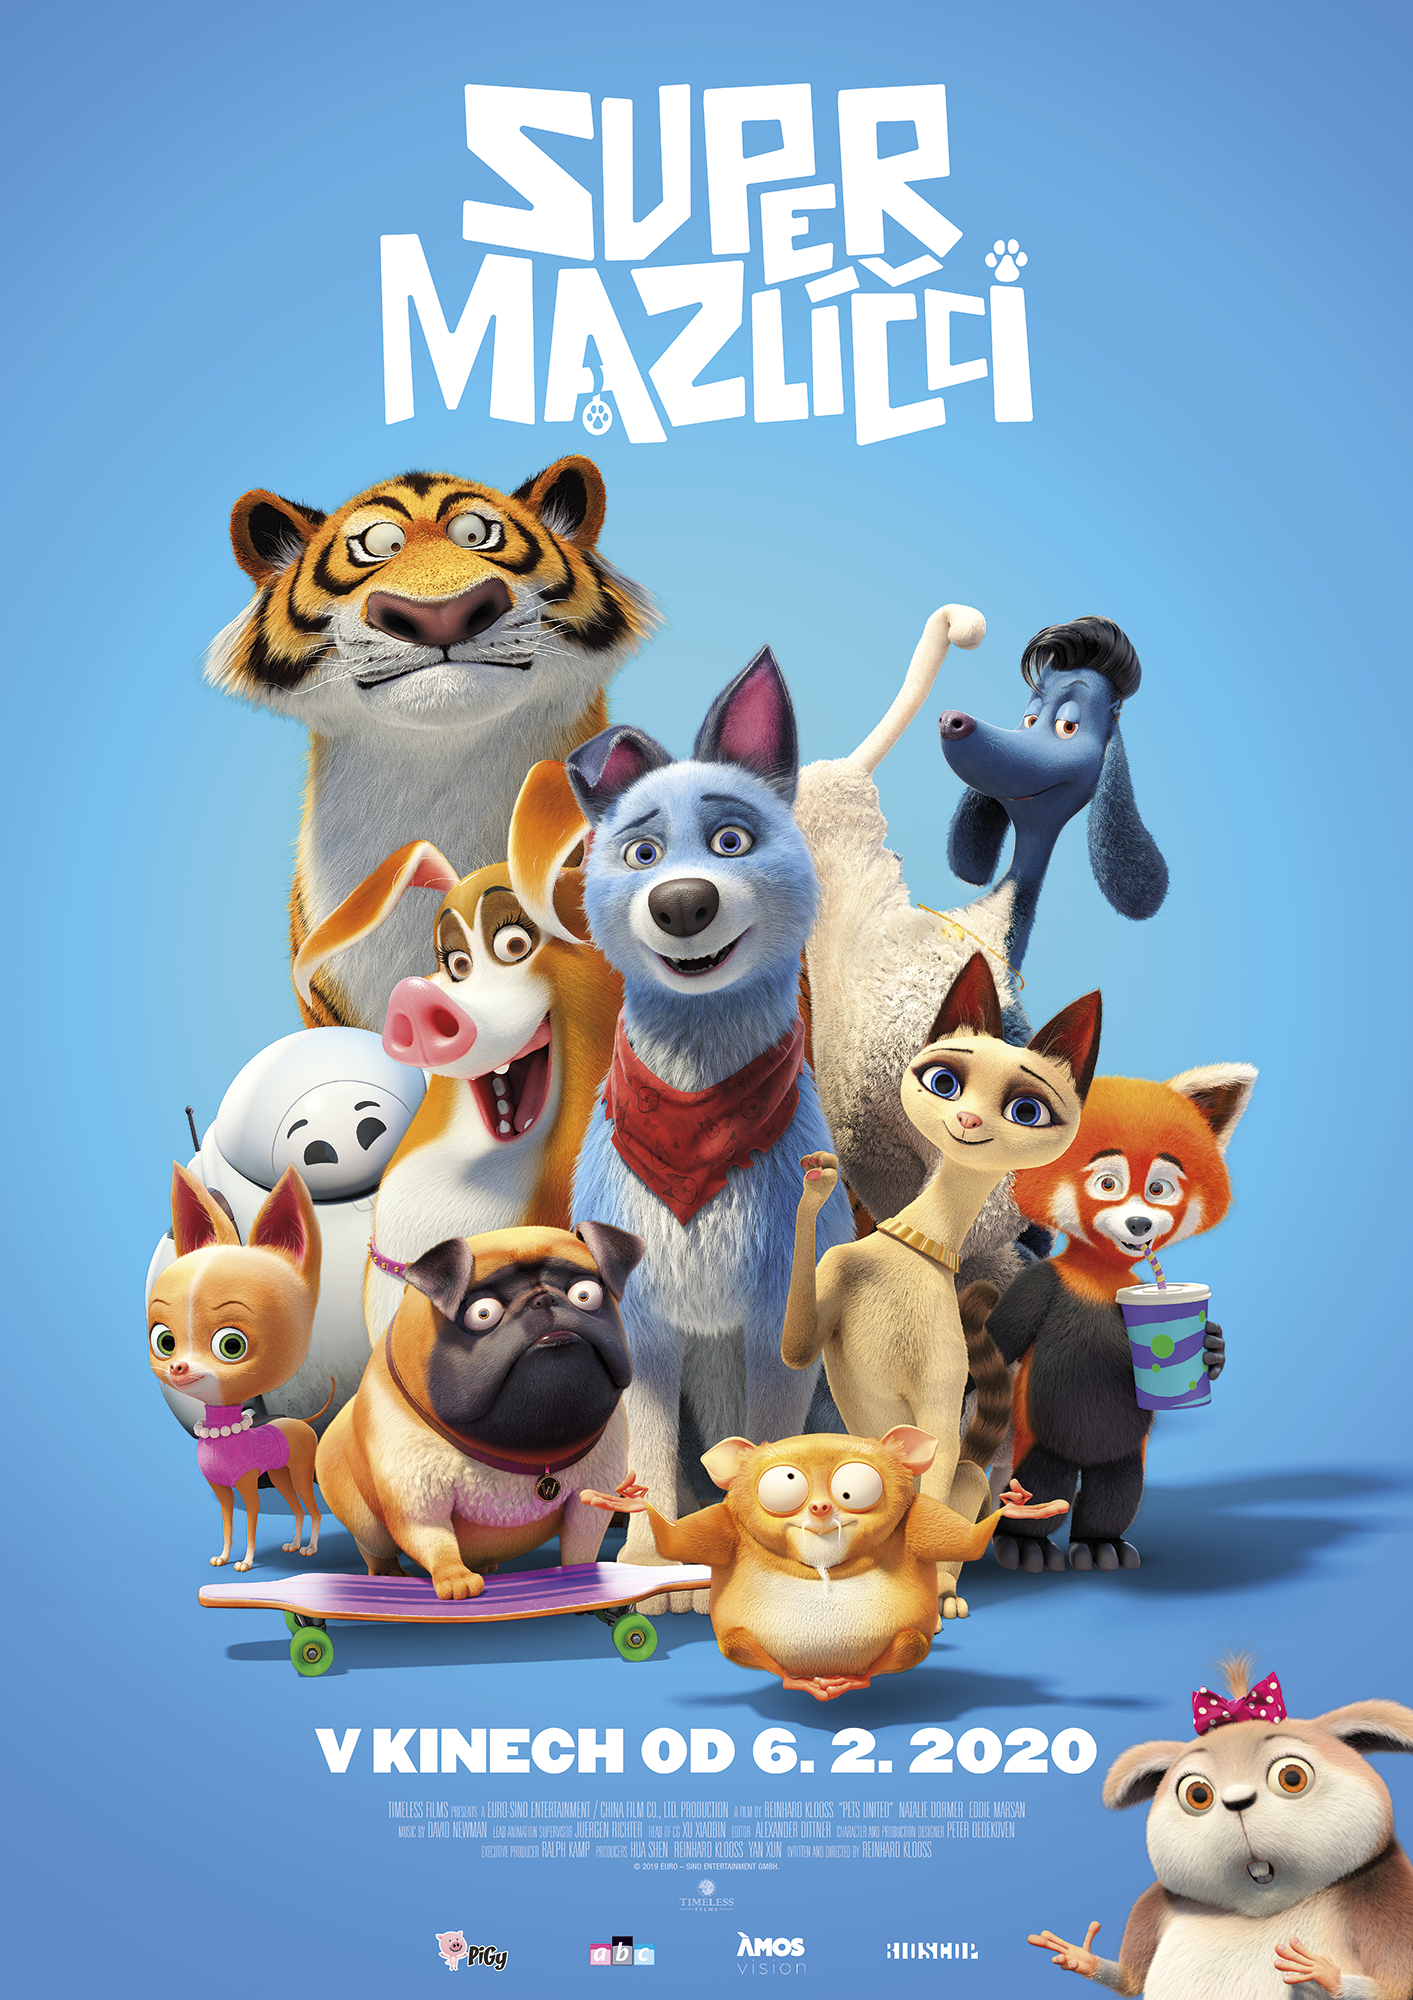 Stiahni si Filmy Kreslené     Super mazlicci / Pets United (2019)(CZ/SK)[WebRip] = CSFD 34%